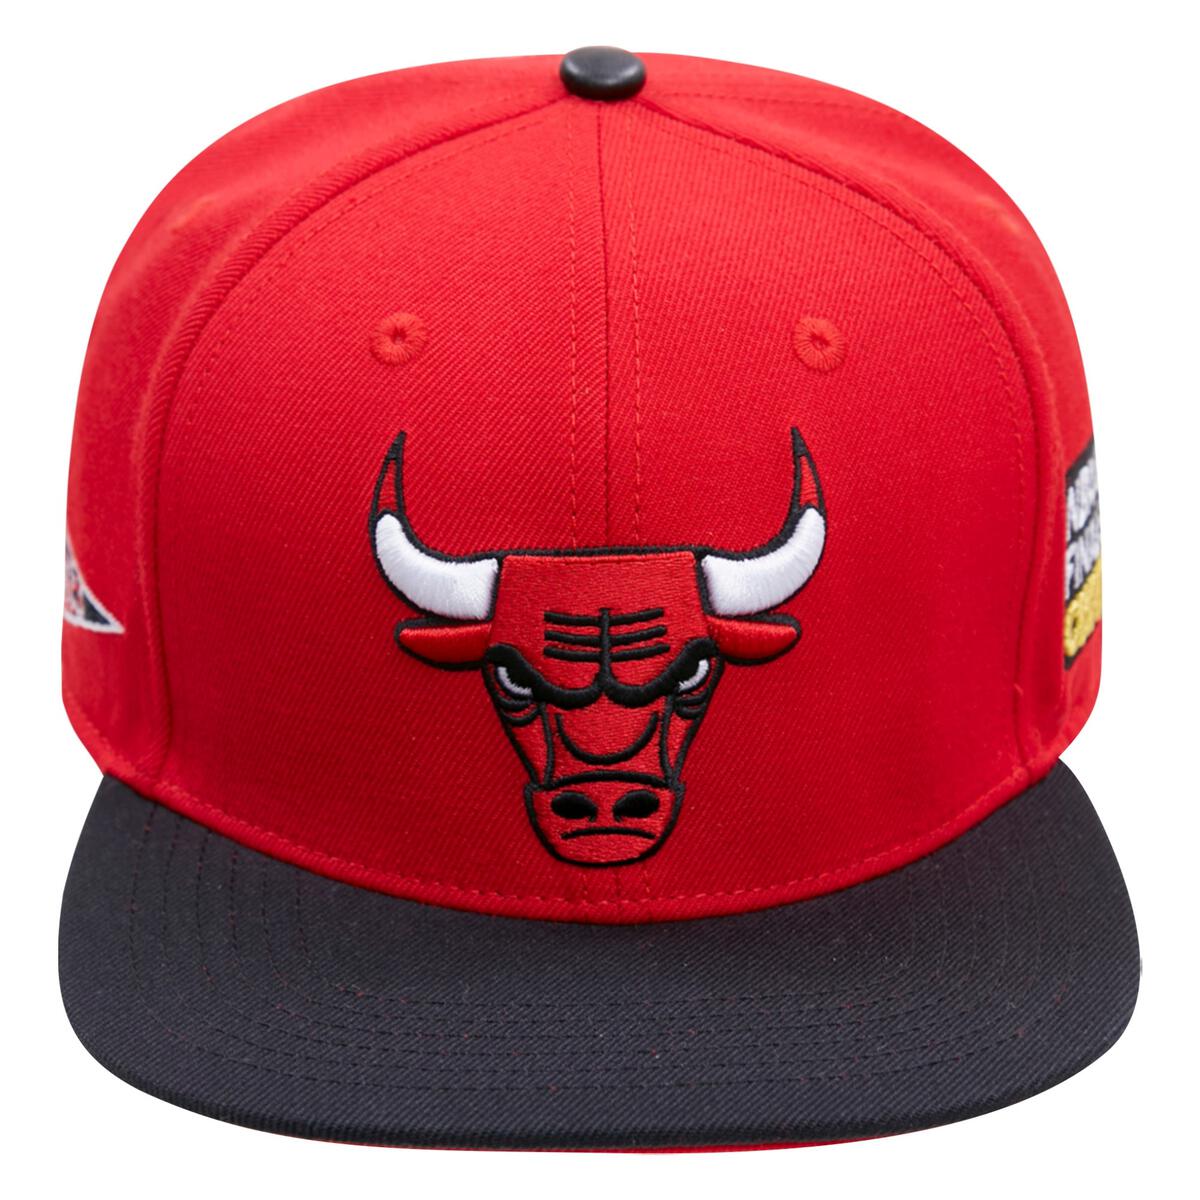 Pro Standard - Chicago Bulls Retro Classic Snapback Hat - Red/Black